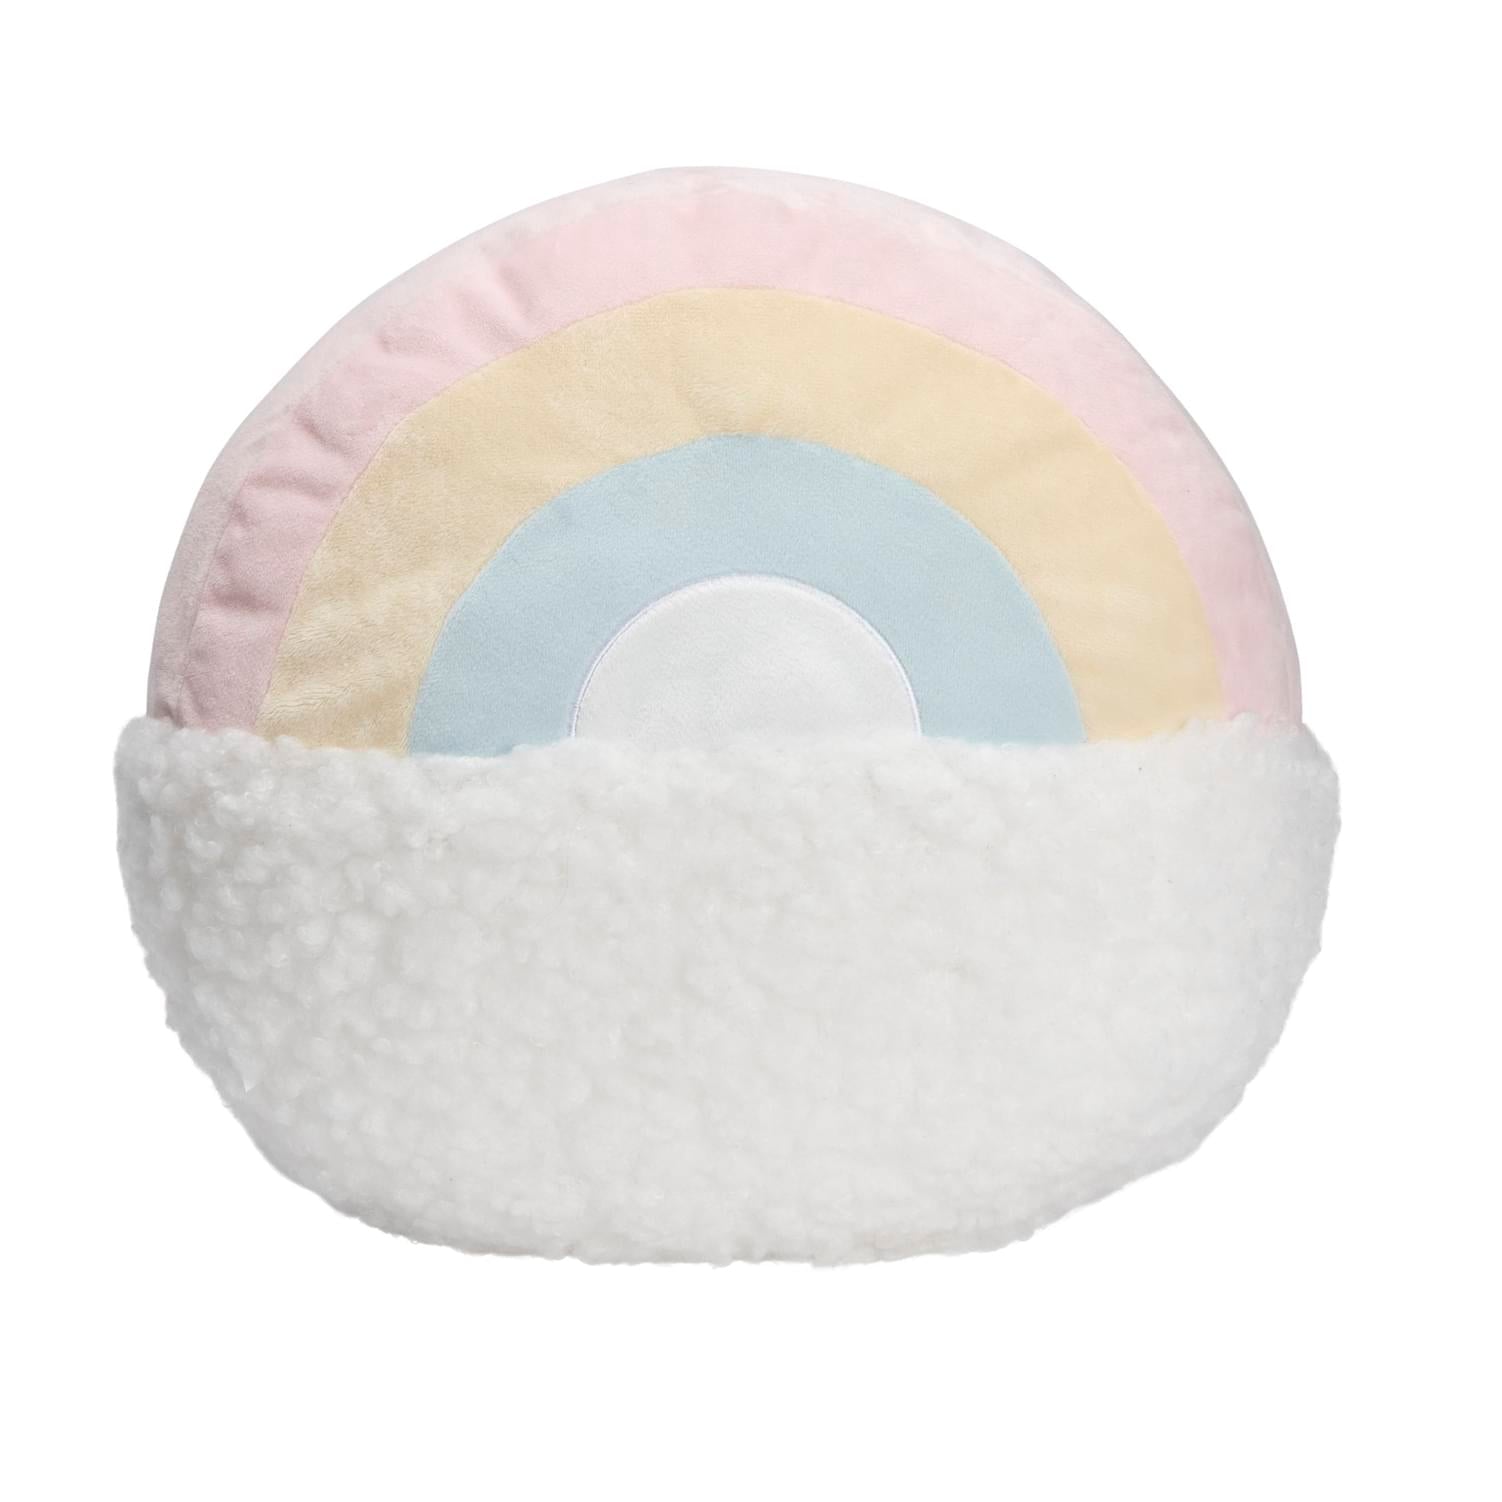 Pusheen with Rainbow 13 Inch Plush Pillow